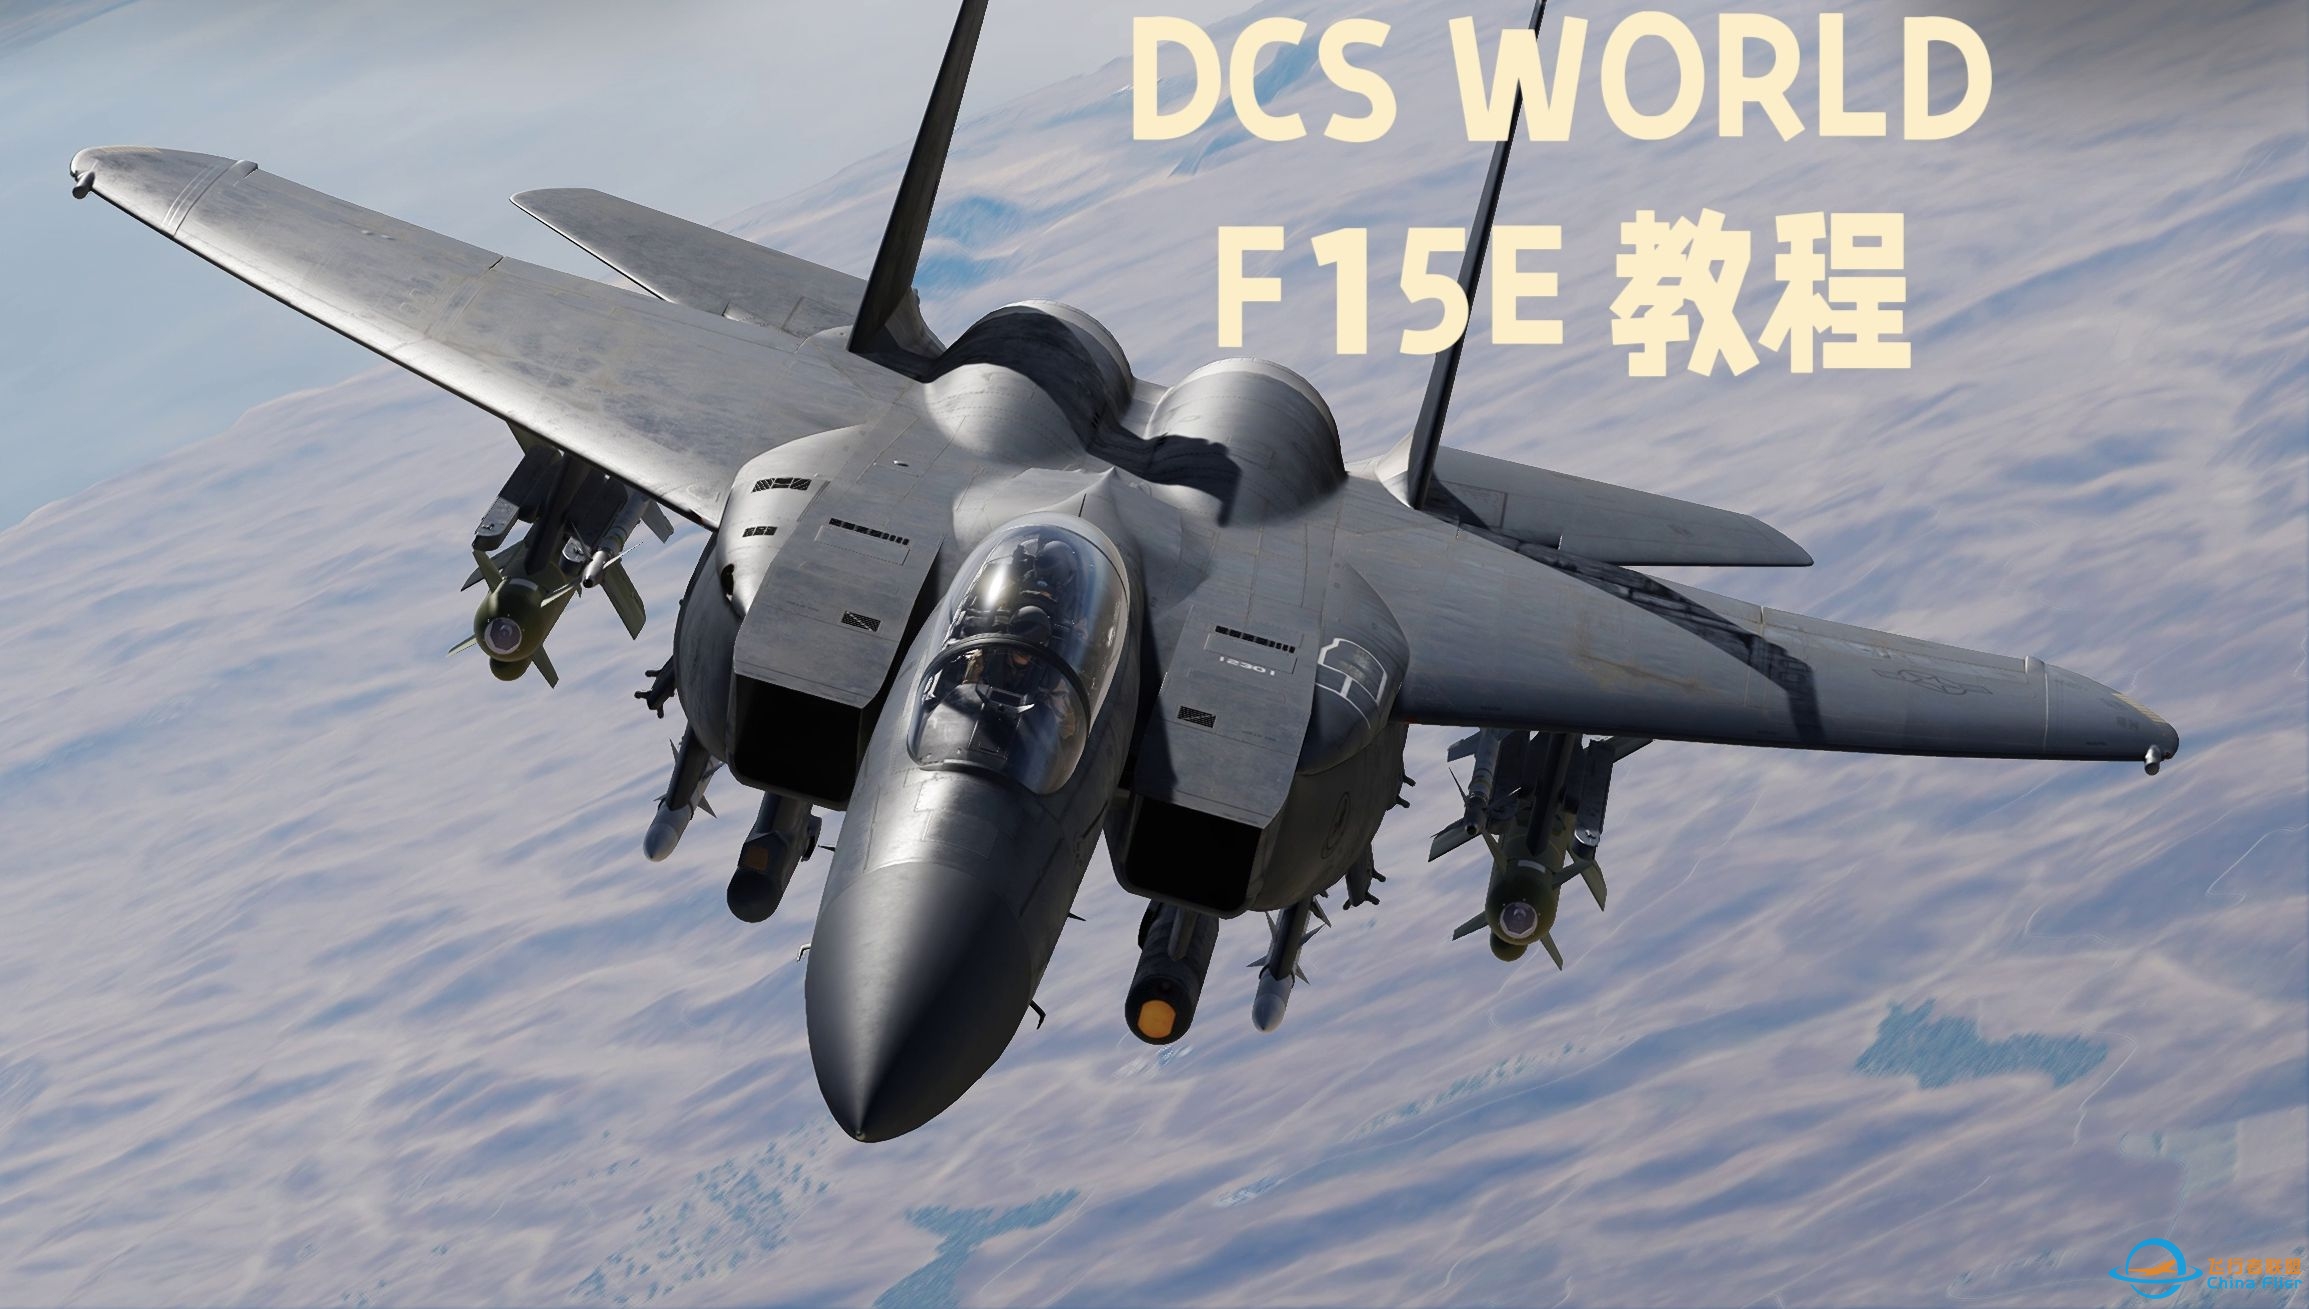 【DCS WORLD F15E教程】第四期 NAV FLIR导航前视红外和地形跟随雷达-6147 